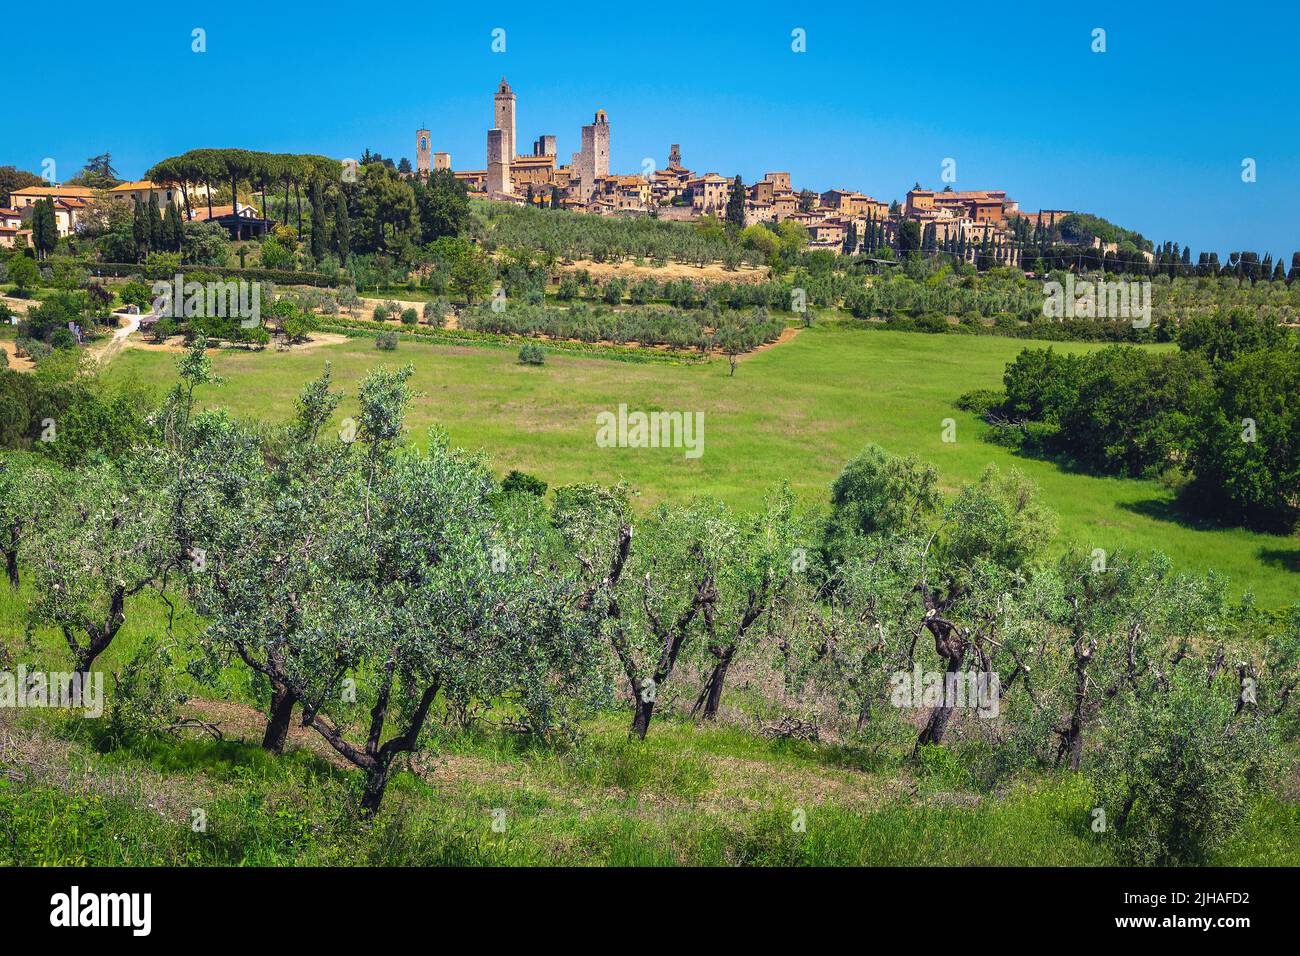 Berühmte San Gimignano mit fantastischen Türmen auf dem Hügel. Tolles Stadtbild mit Olivenplantagen in der Toskana, San Gimignano, Italien, Europa Stockfoto